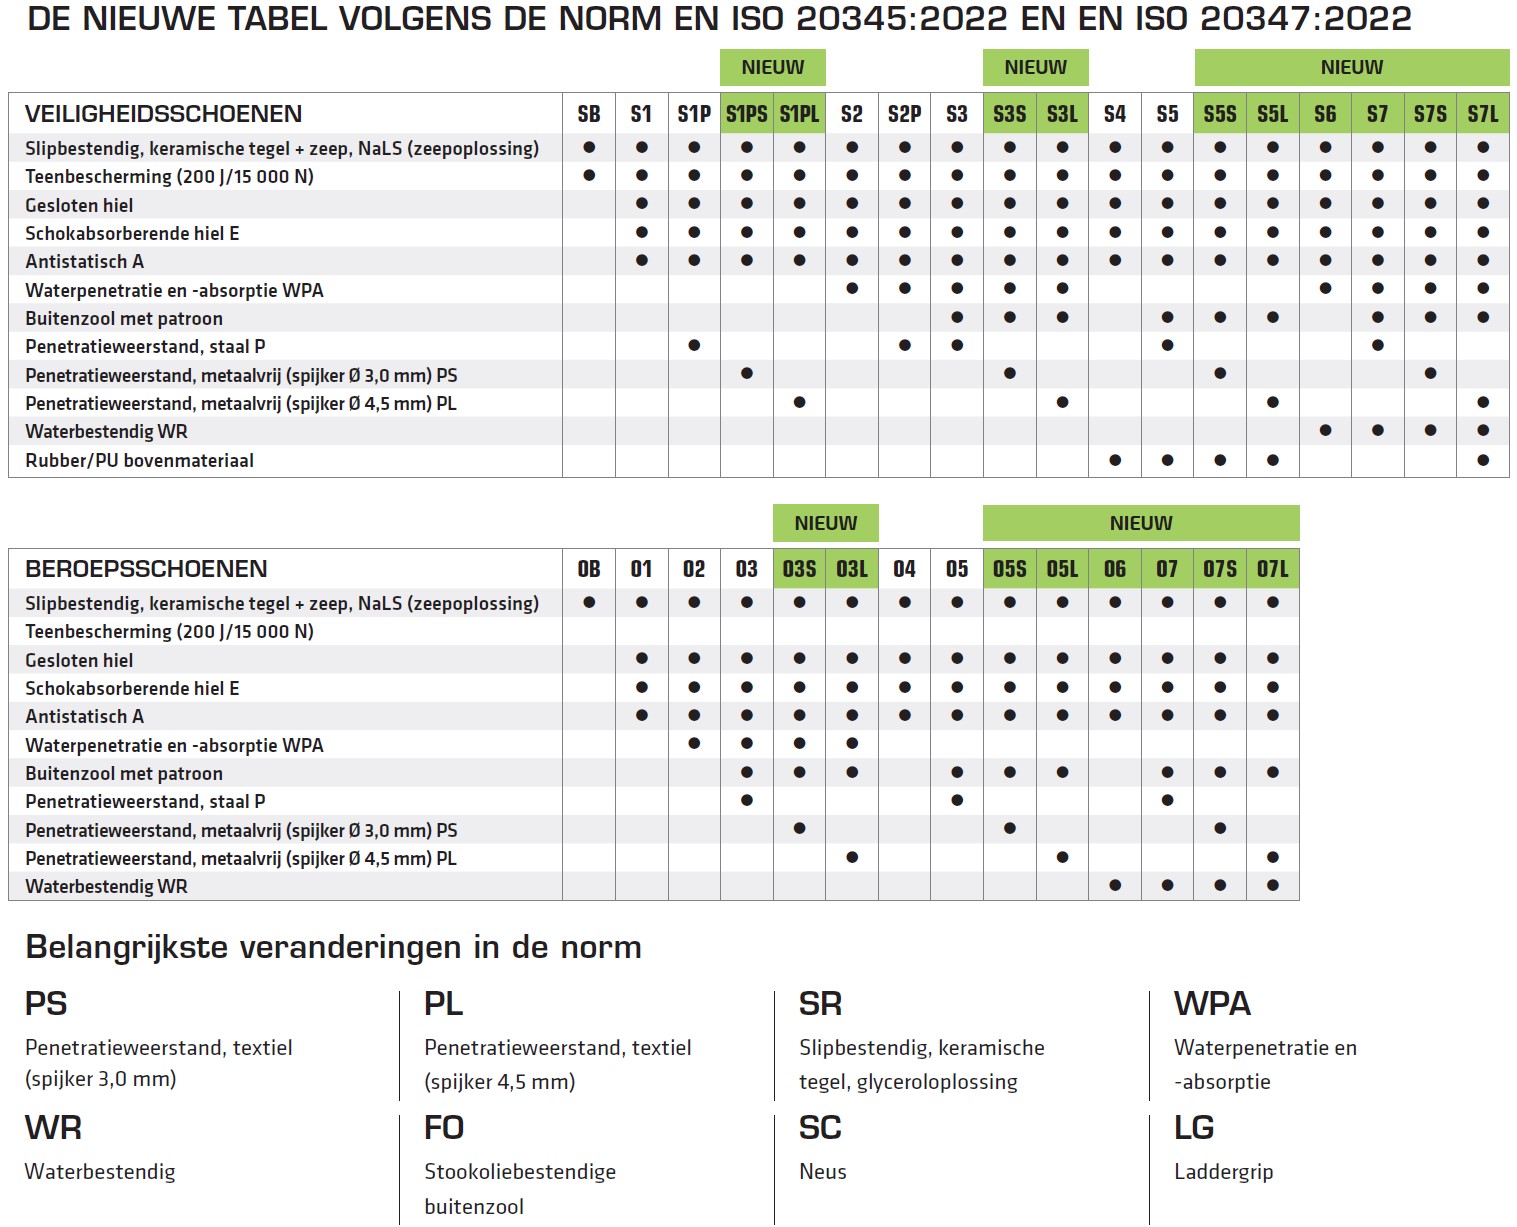 New EN standard tables NL